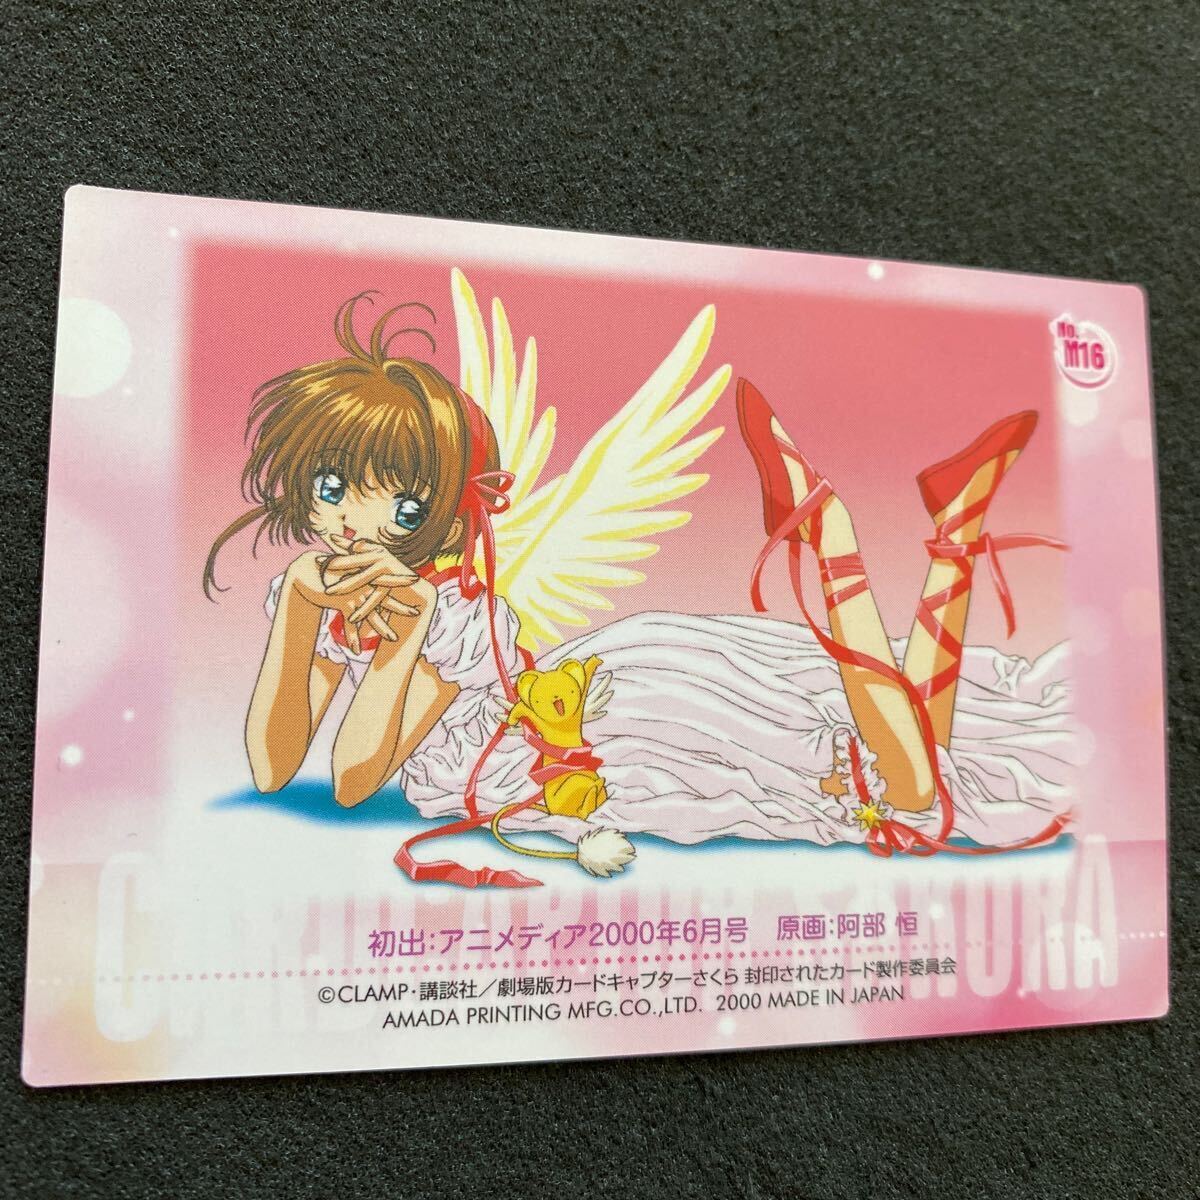  Cardcaptor Sakura theater version . seal was done card compilation Amada trading collection metallic tent M16 CLAMP anime trading card beautiful goods 